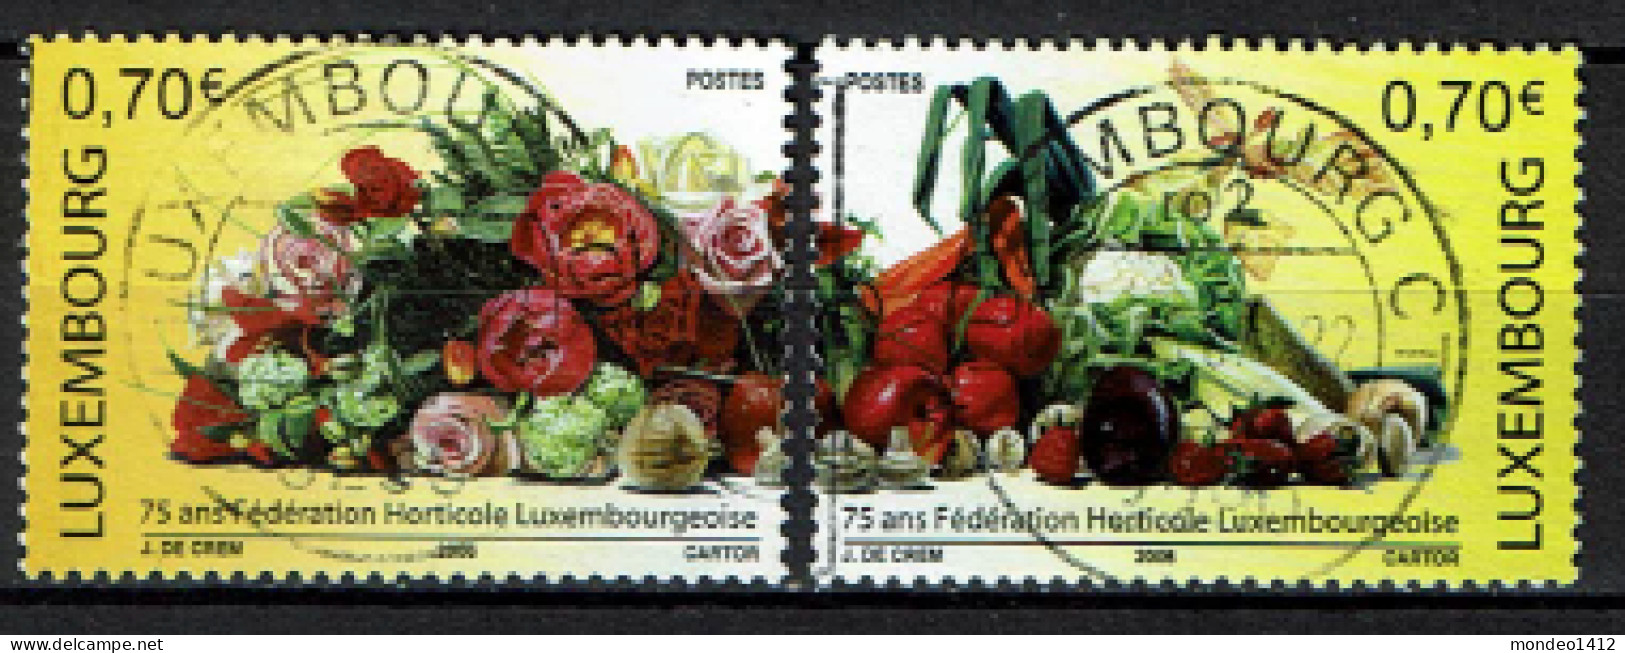 Luxembourg 2006 - YT 1678/1679 - Fleurs, Fruits Et Légumes, Flowers, Fruits And Vegetables - Usados